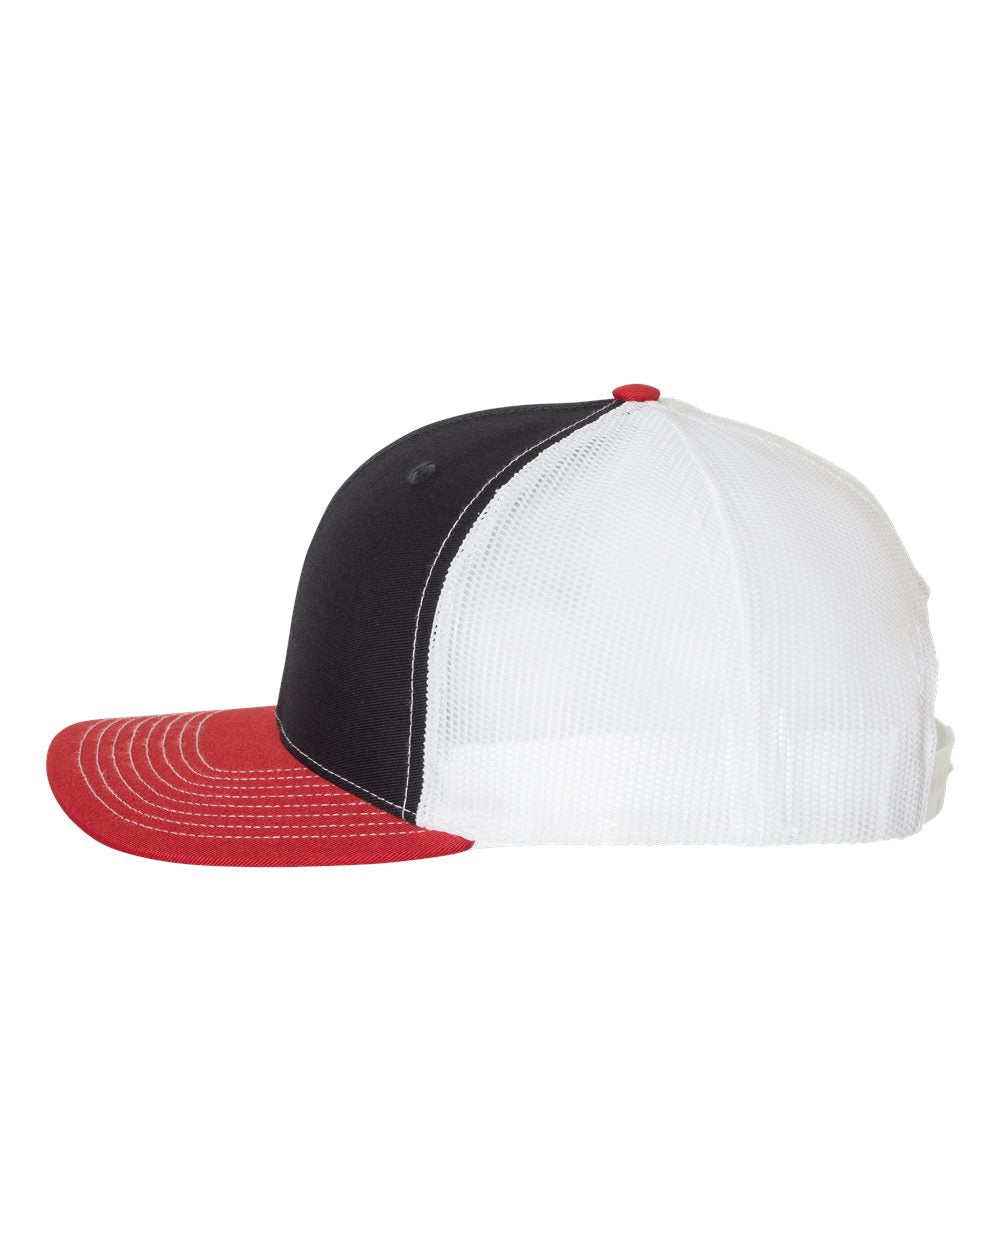 Richardson Adjustable Custom Snapback Trucker Caps, Navy White Red